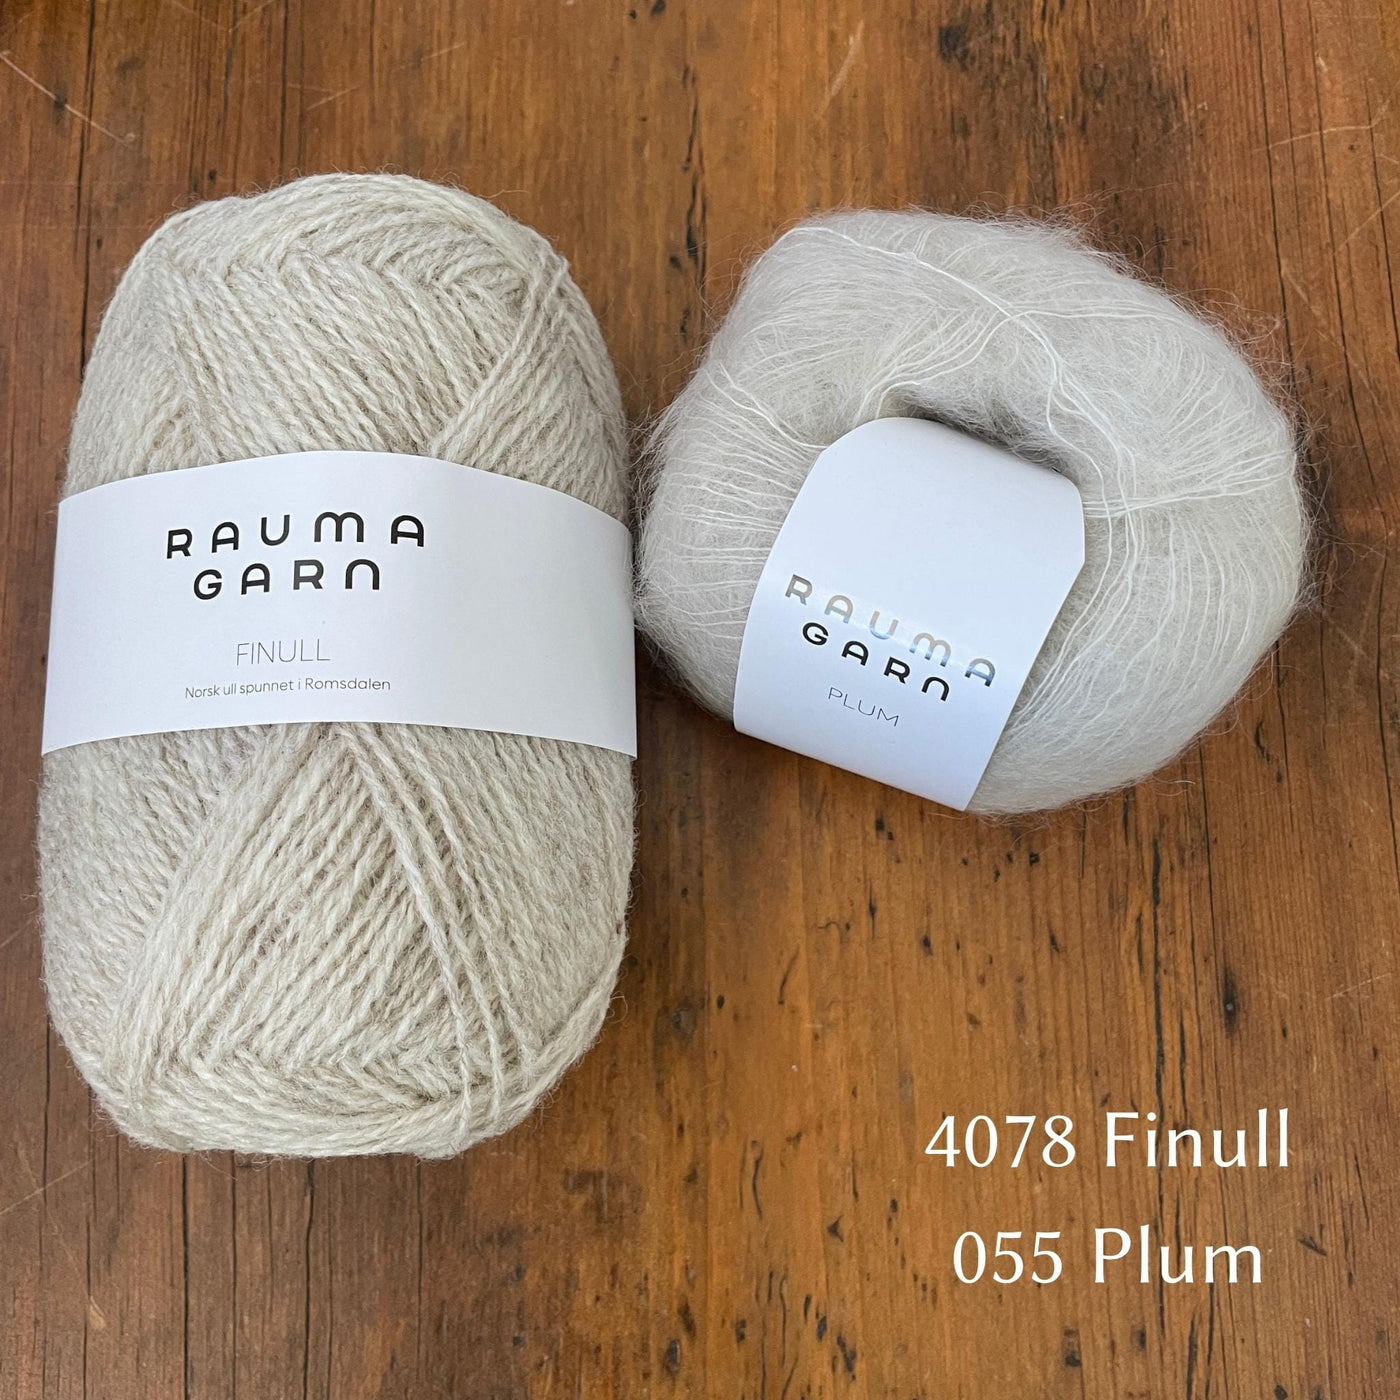 Ball of Rauma Finullgarn yarn in heathered oatmeal / cream with coordinating Plum yarn 